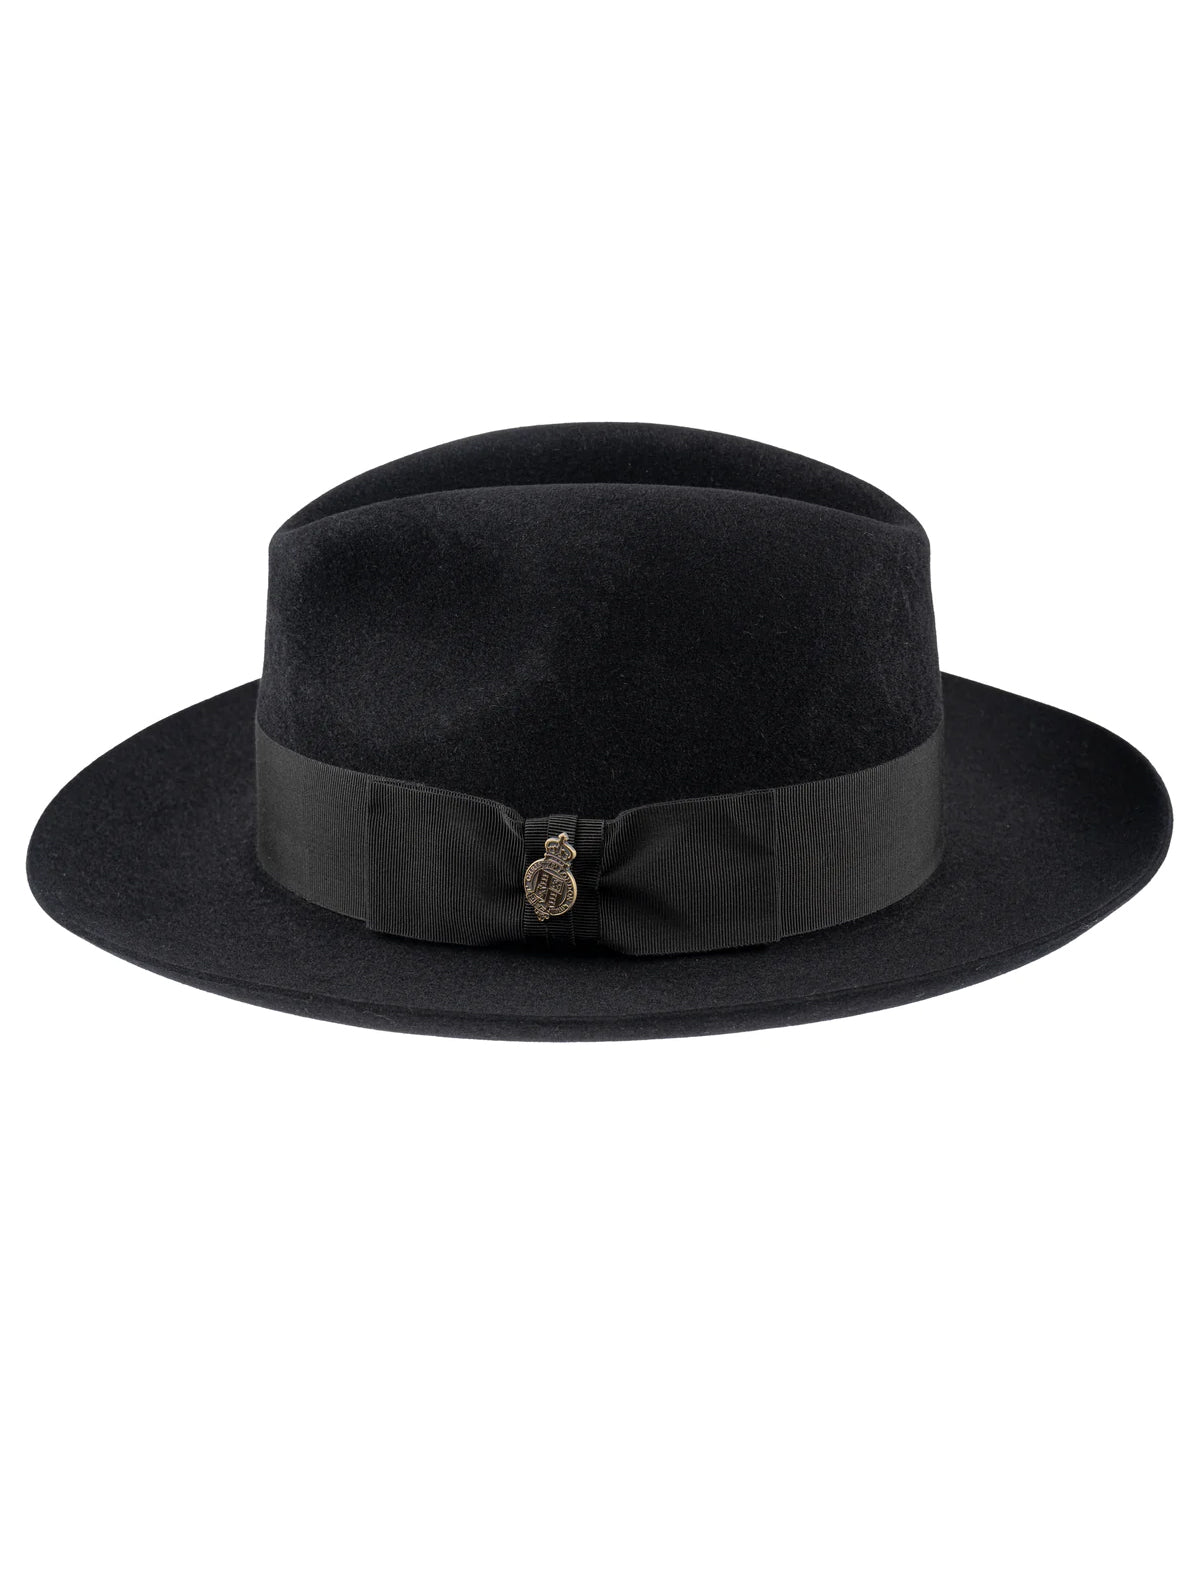 Christys' Classic Felt Fedora Hat - Black